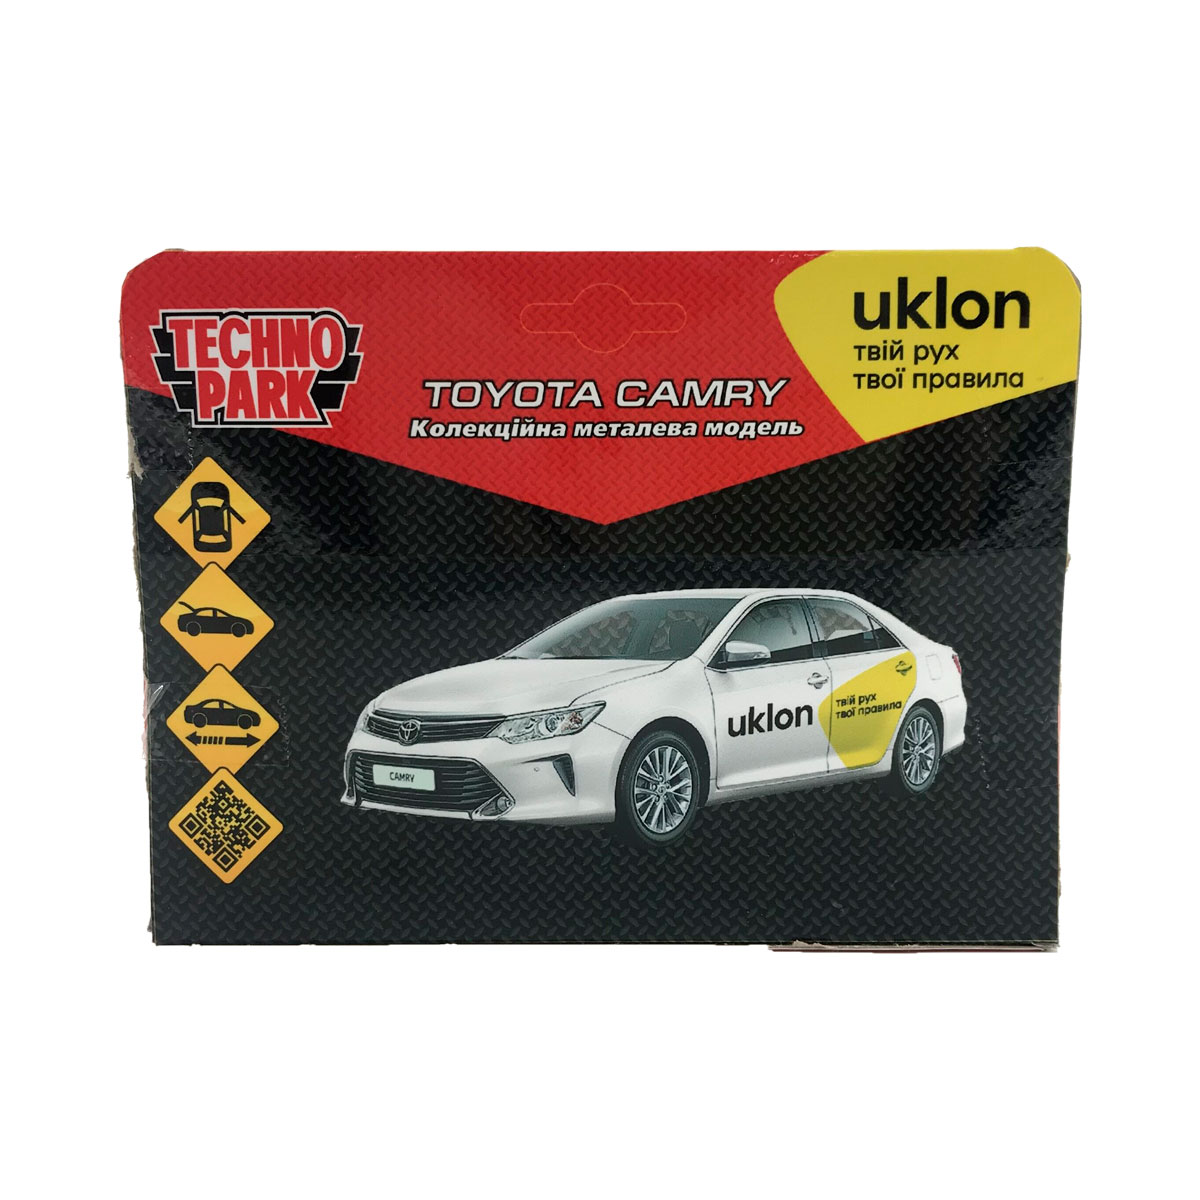 Автомодель Technopark Toyota Camry Uklon (CAMRY-BK-Uk)